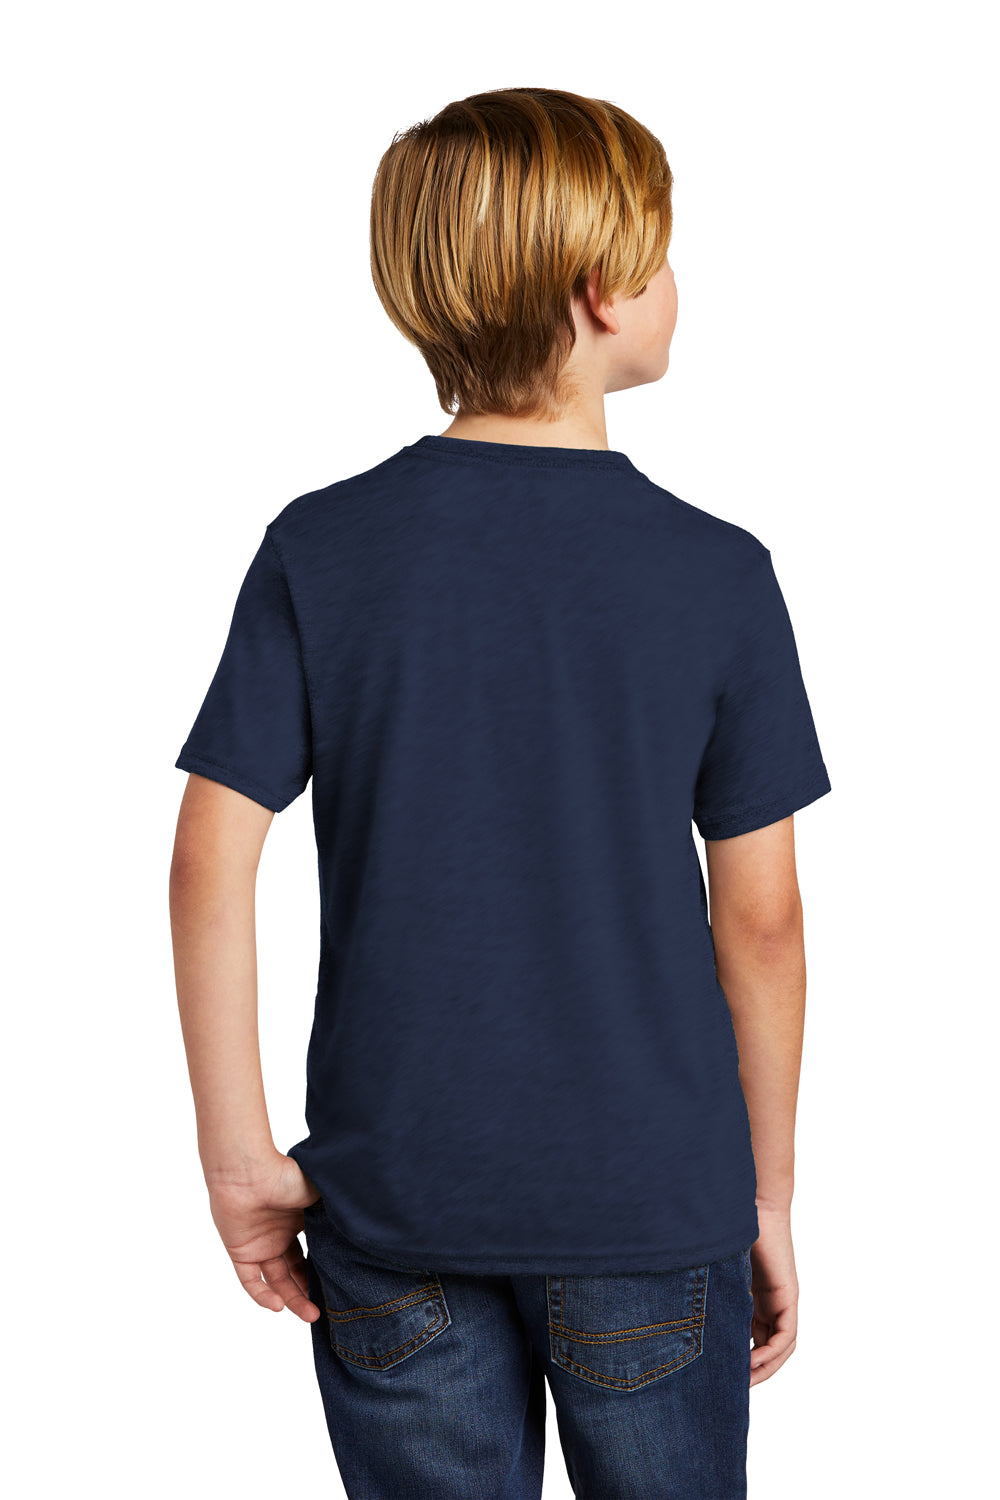 Allmade AL207 Youth Short Sleeve Crewneck T-Shirt Night Sky Navy Blue Model Back